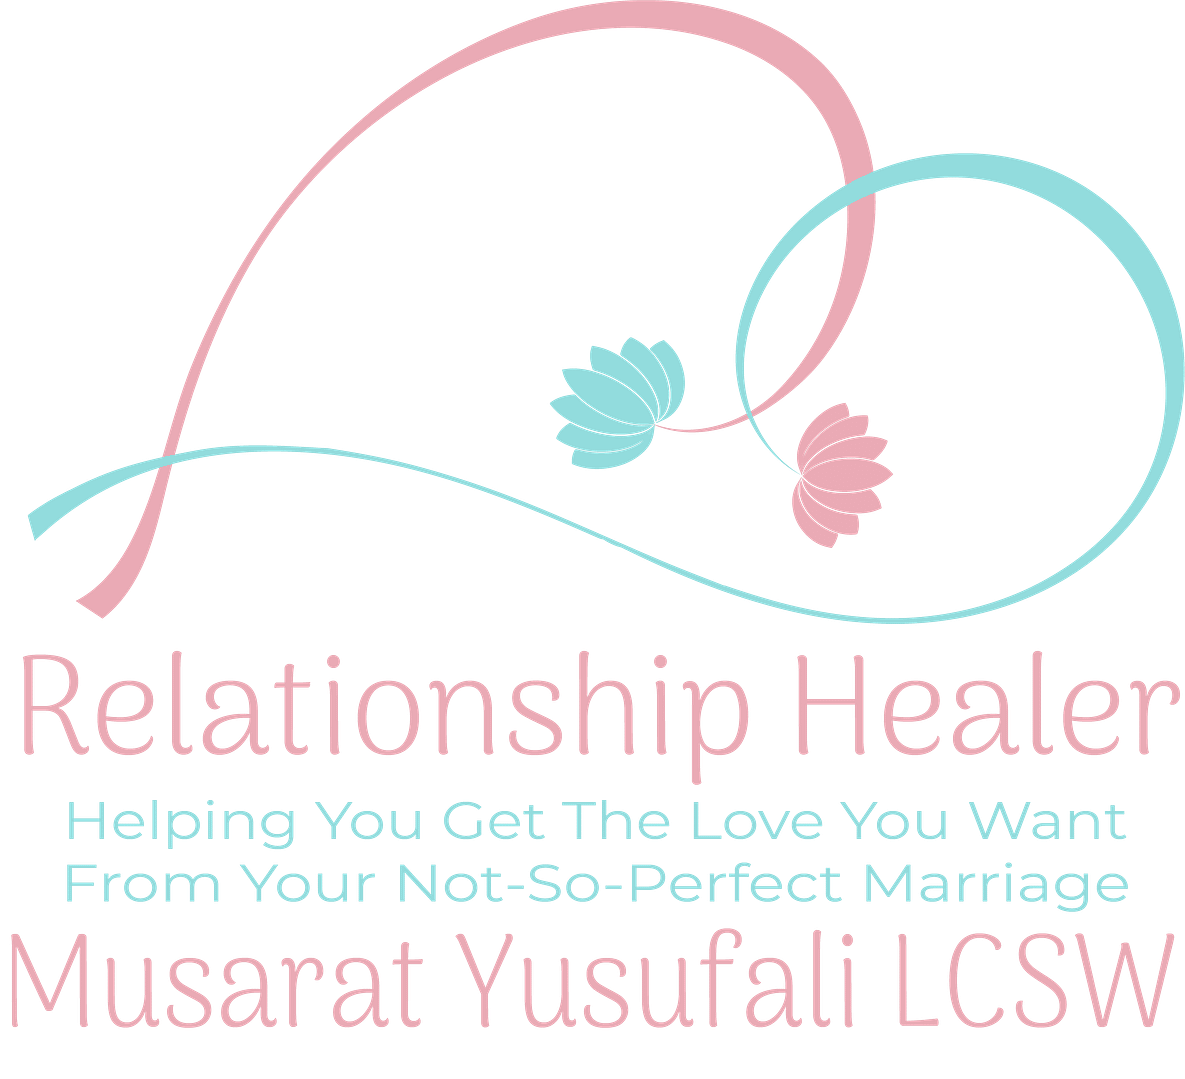 Musarat Yusufali LCSW